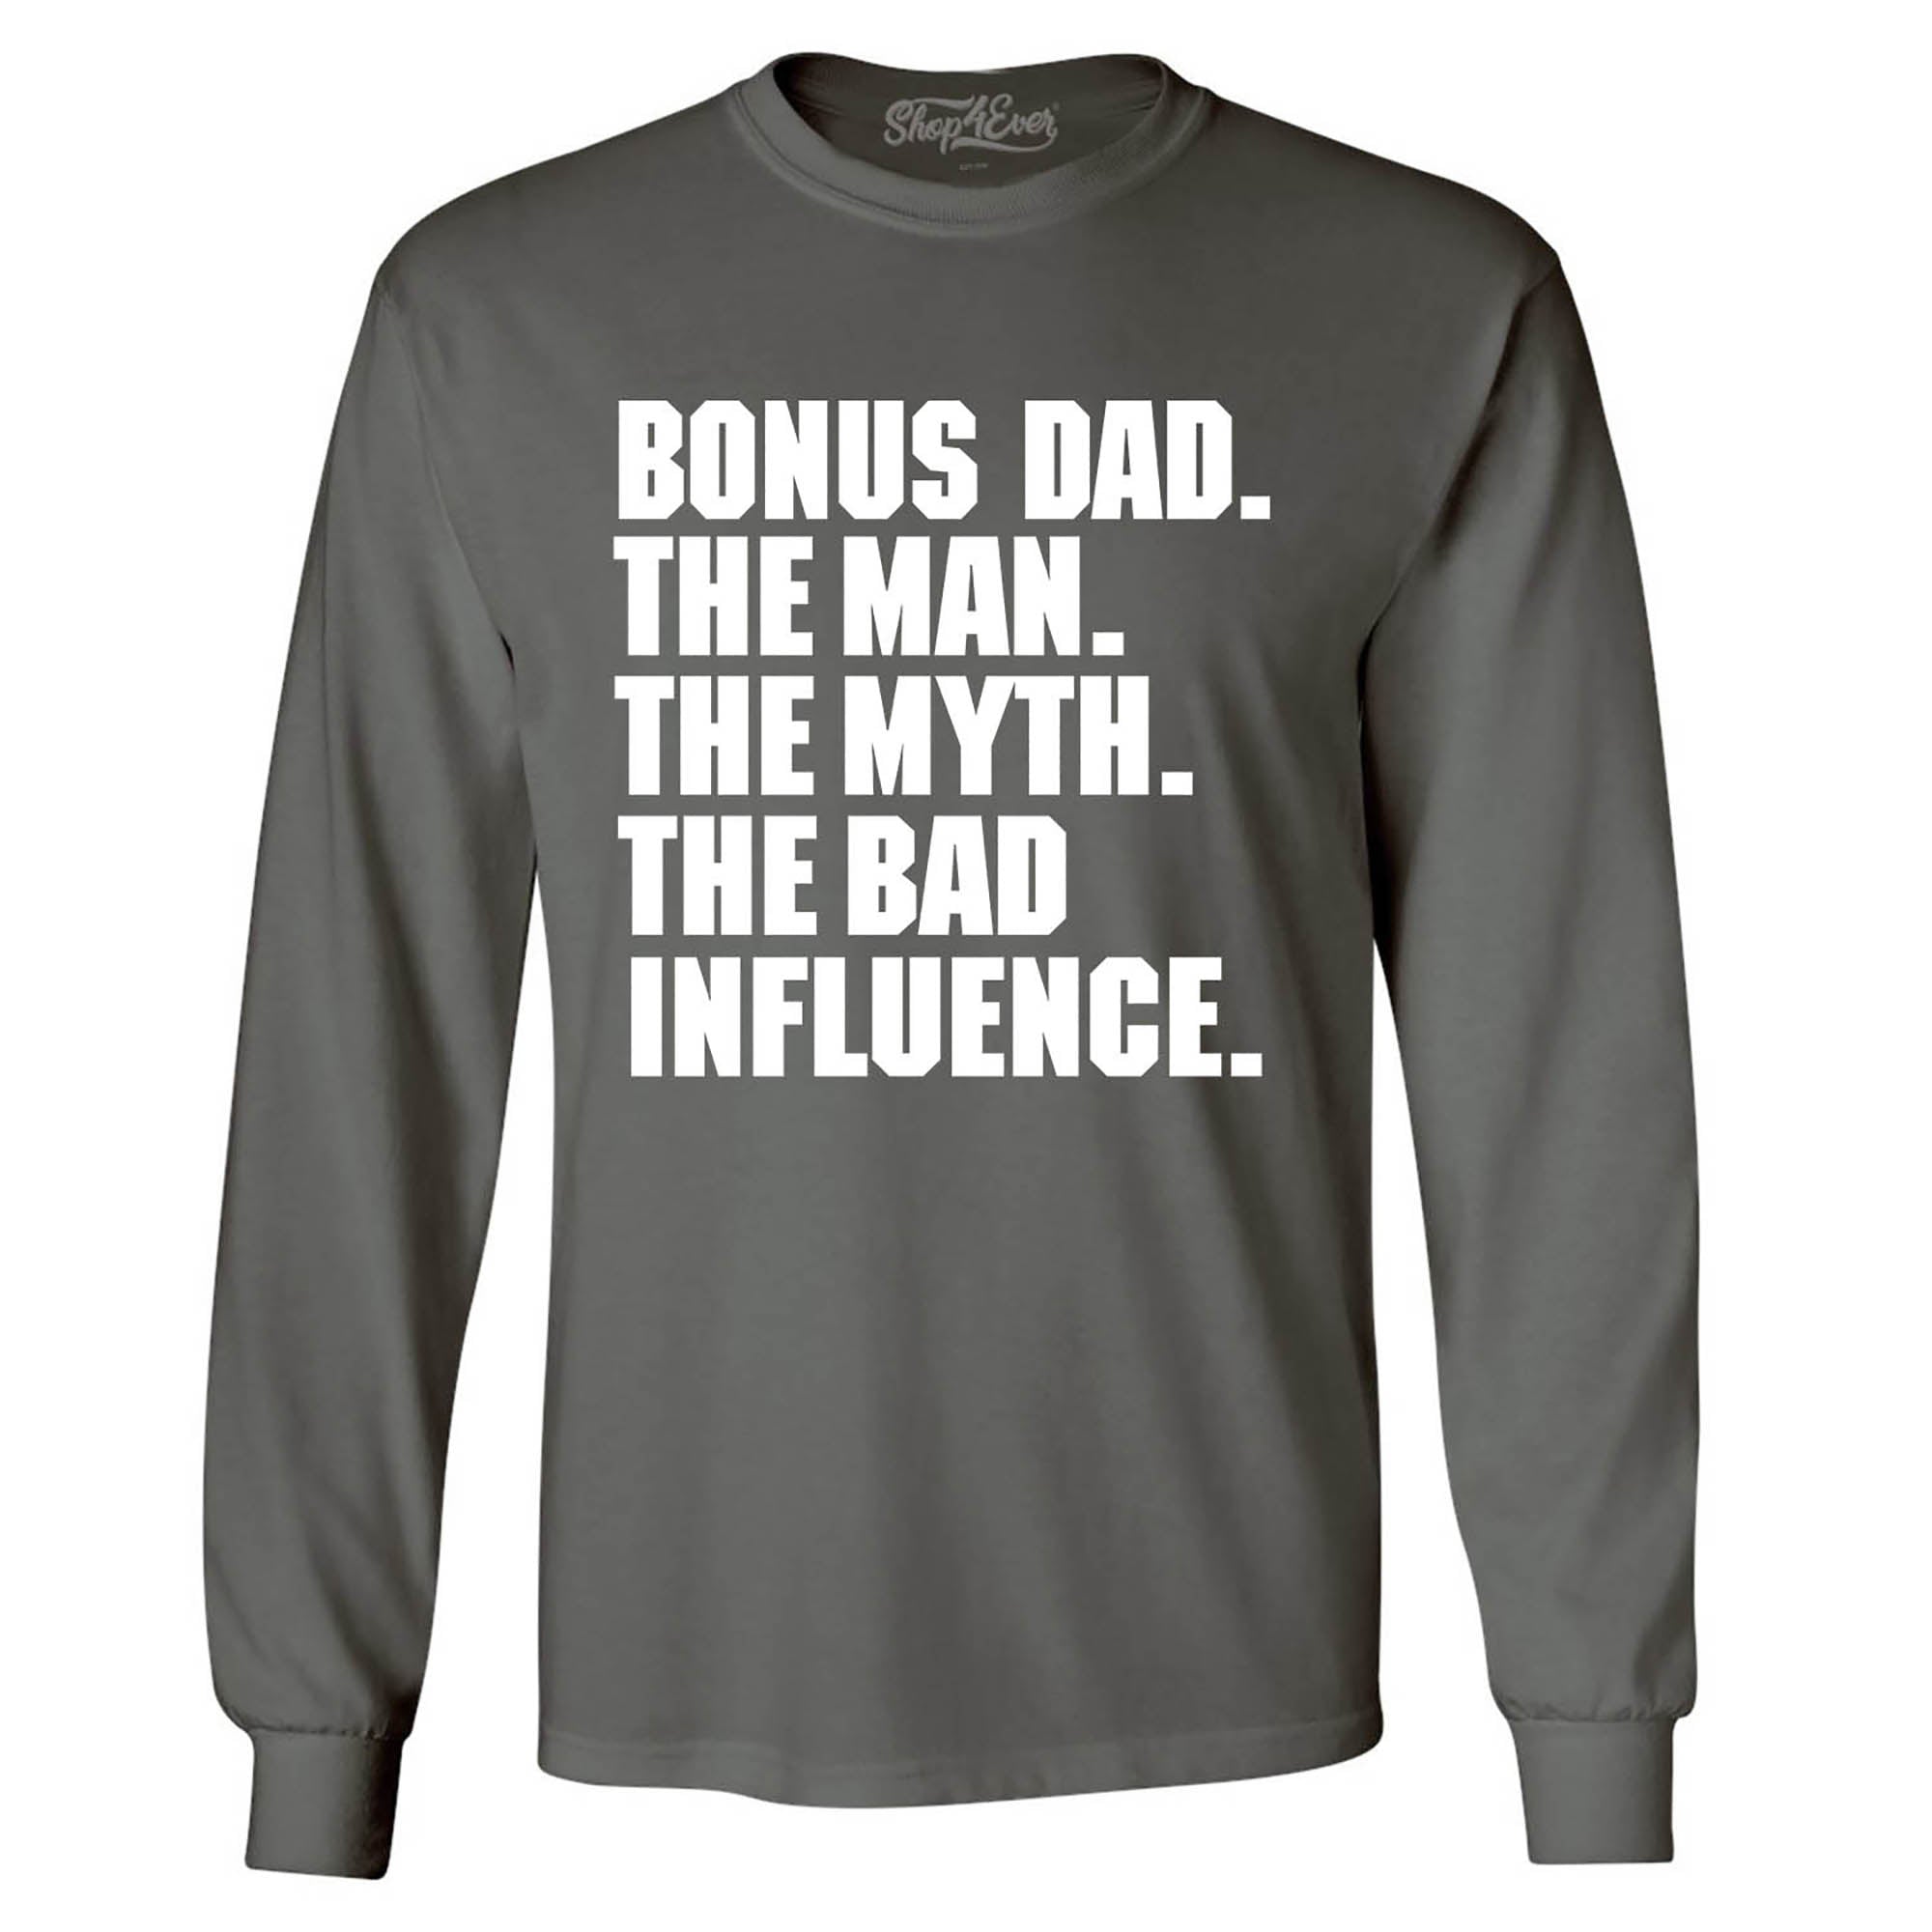 Bonus Dad The Man The Myth The Bad Influence Long Sleeve Shirt